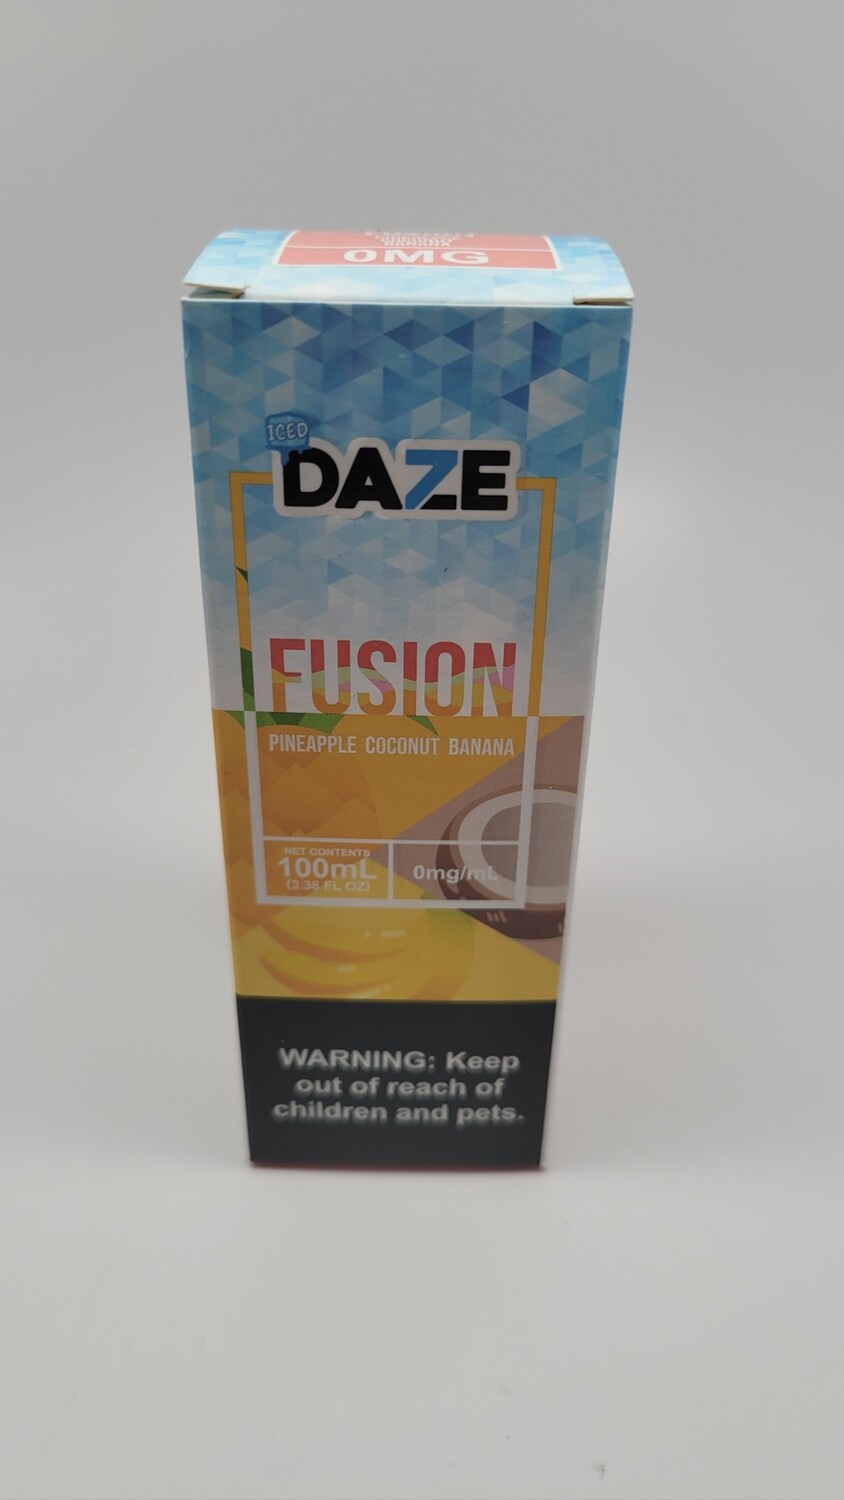 Daze Fusion 100ml Pineapple Coconut Banana iced